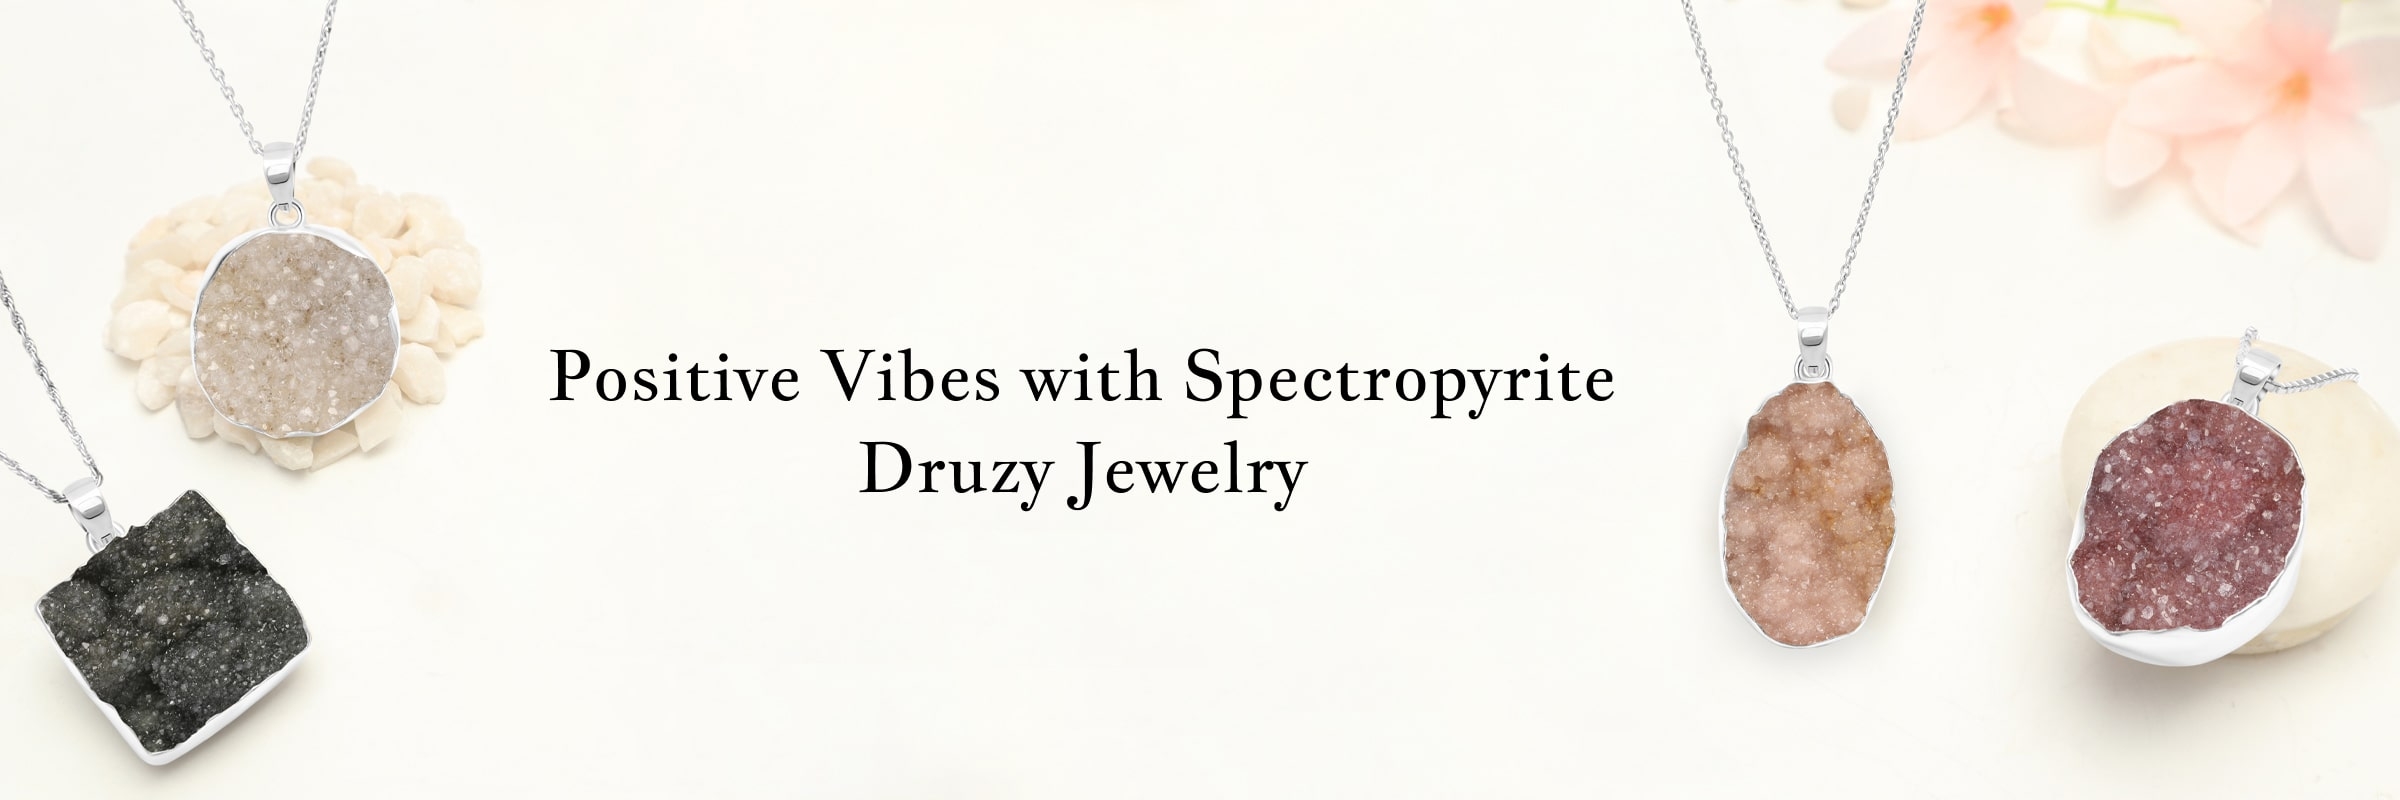 Benefits of wearing Spectropyrite Druzy